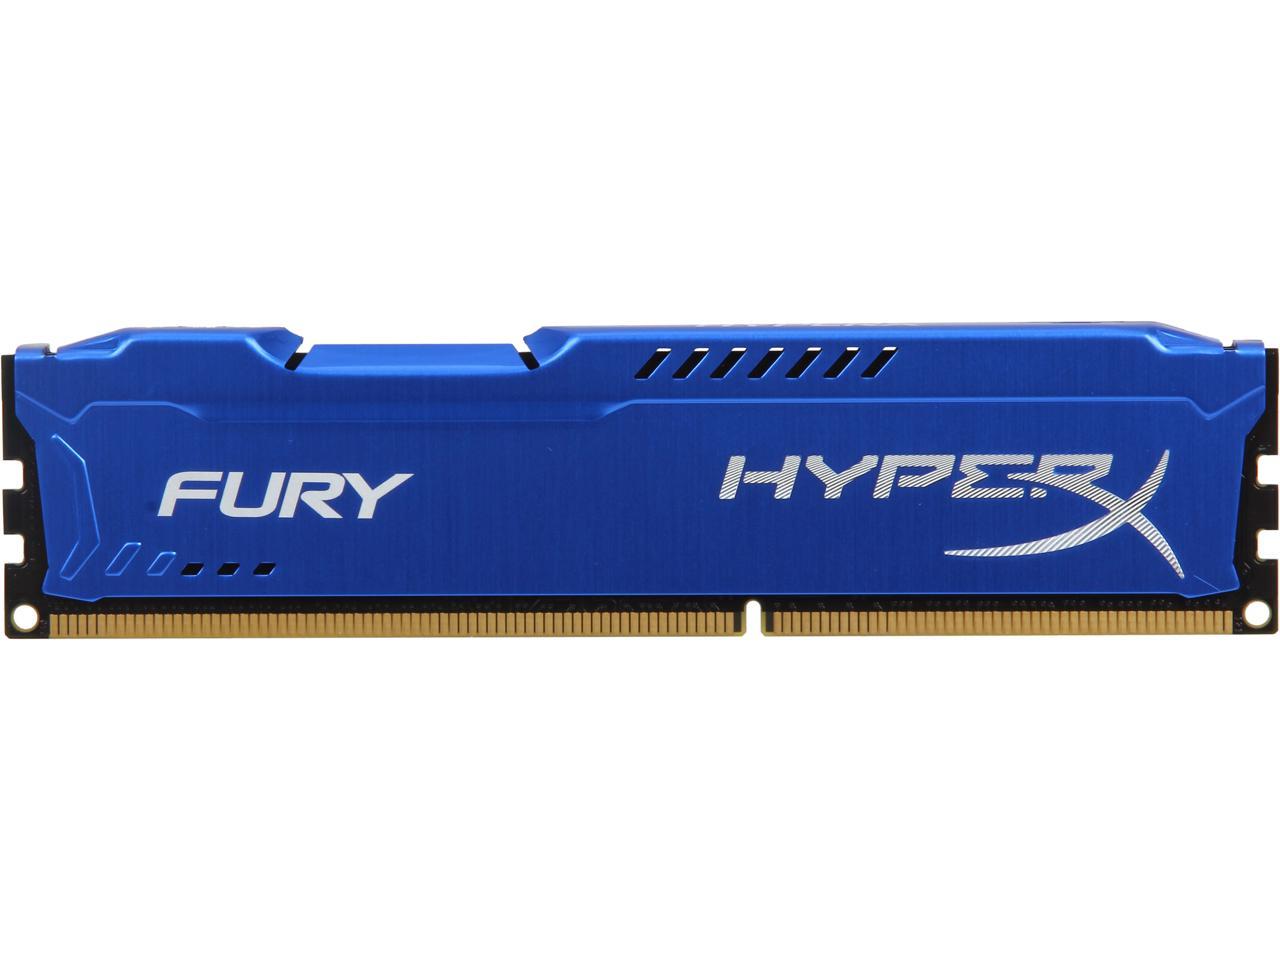 HyperX FURY 4GB 240-Pin DDR3 SDRAM DDR3 1333 (PC3 10600) Desktop Memory Model HX313C9F/4